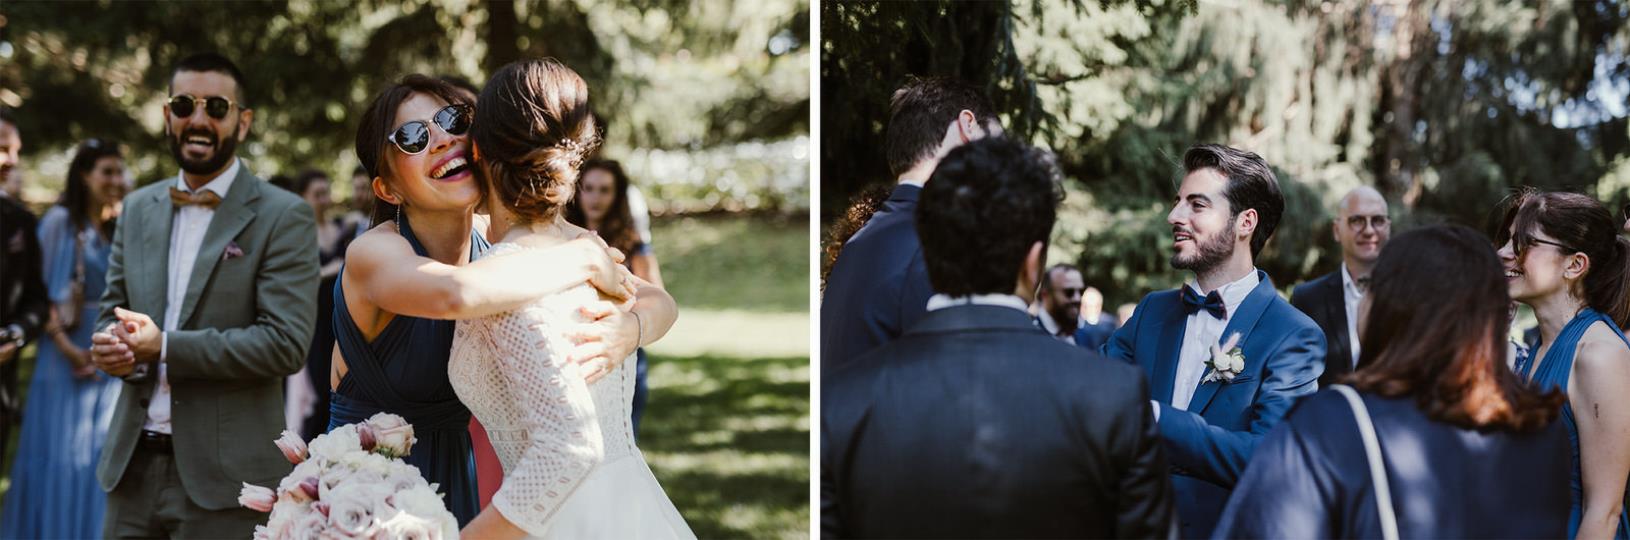 reportage wedding photographer | Laura Stramacchia | Wedding Photography